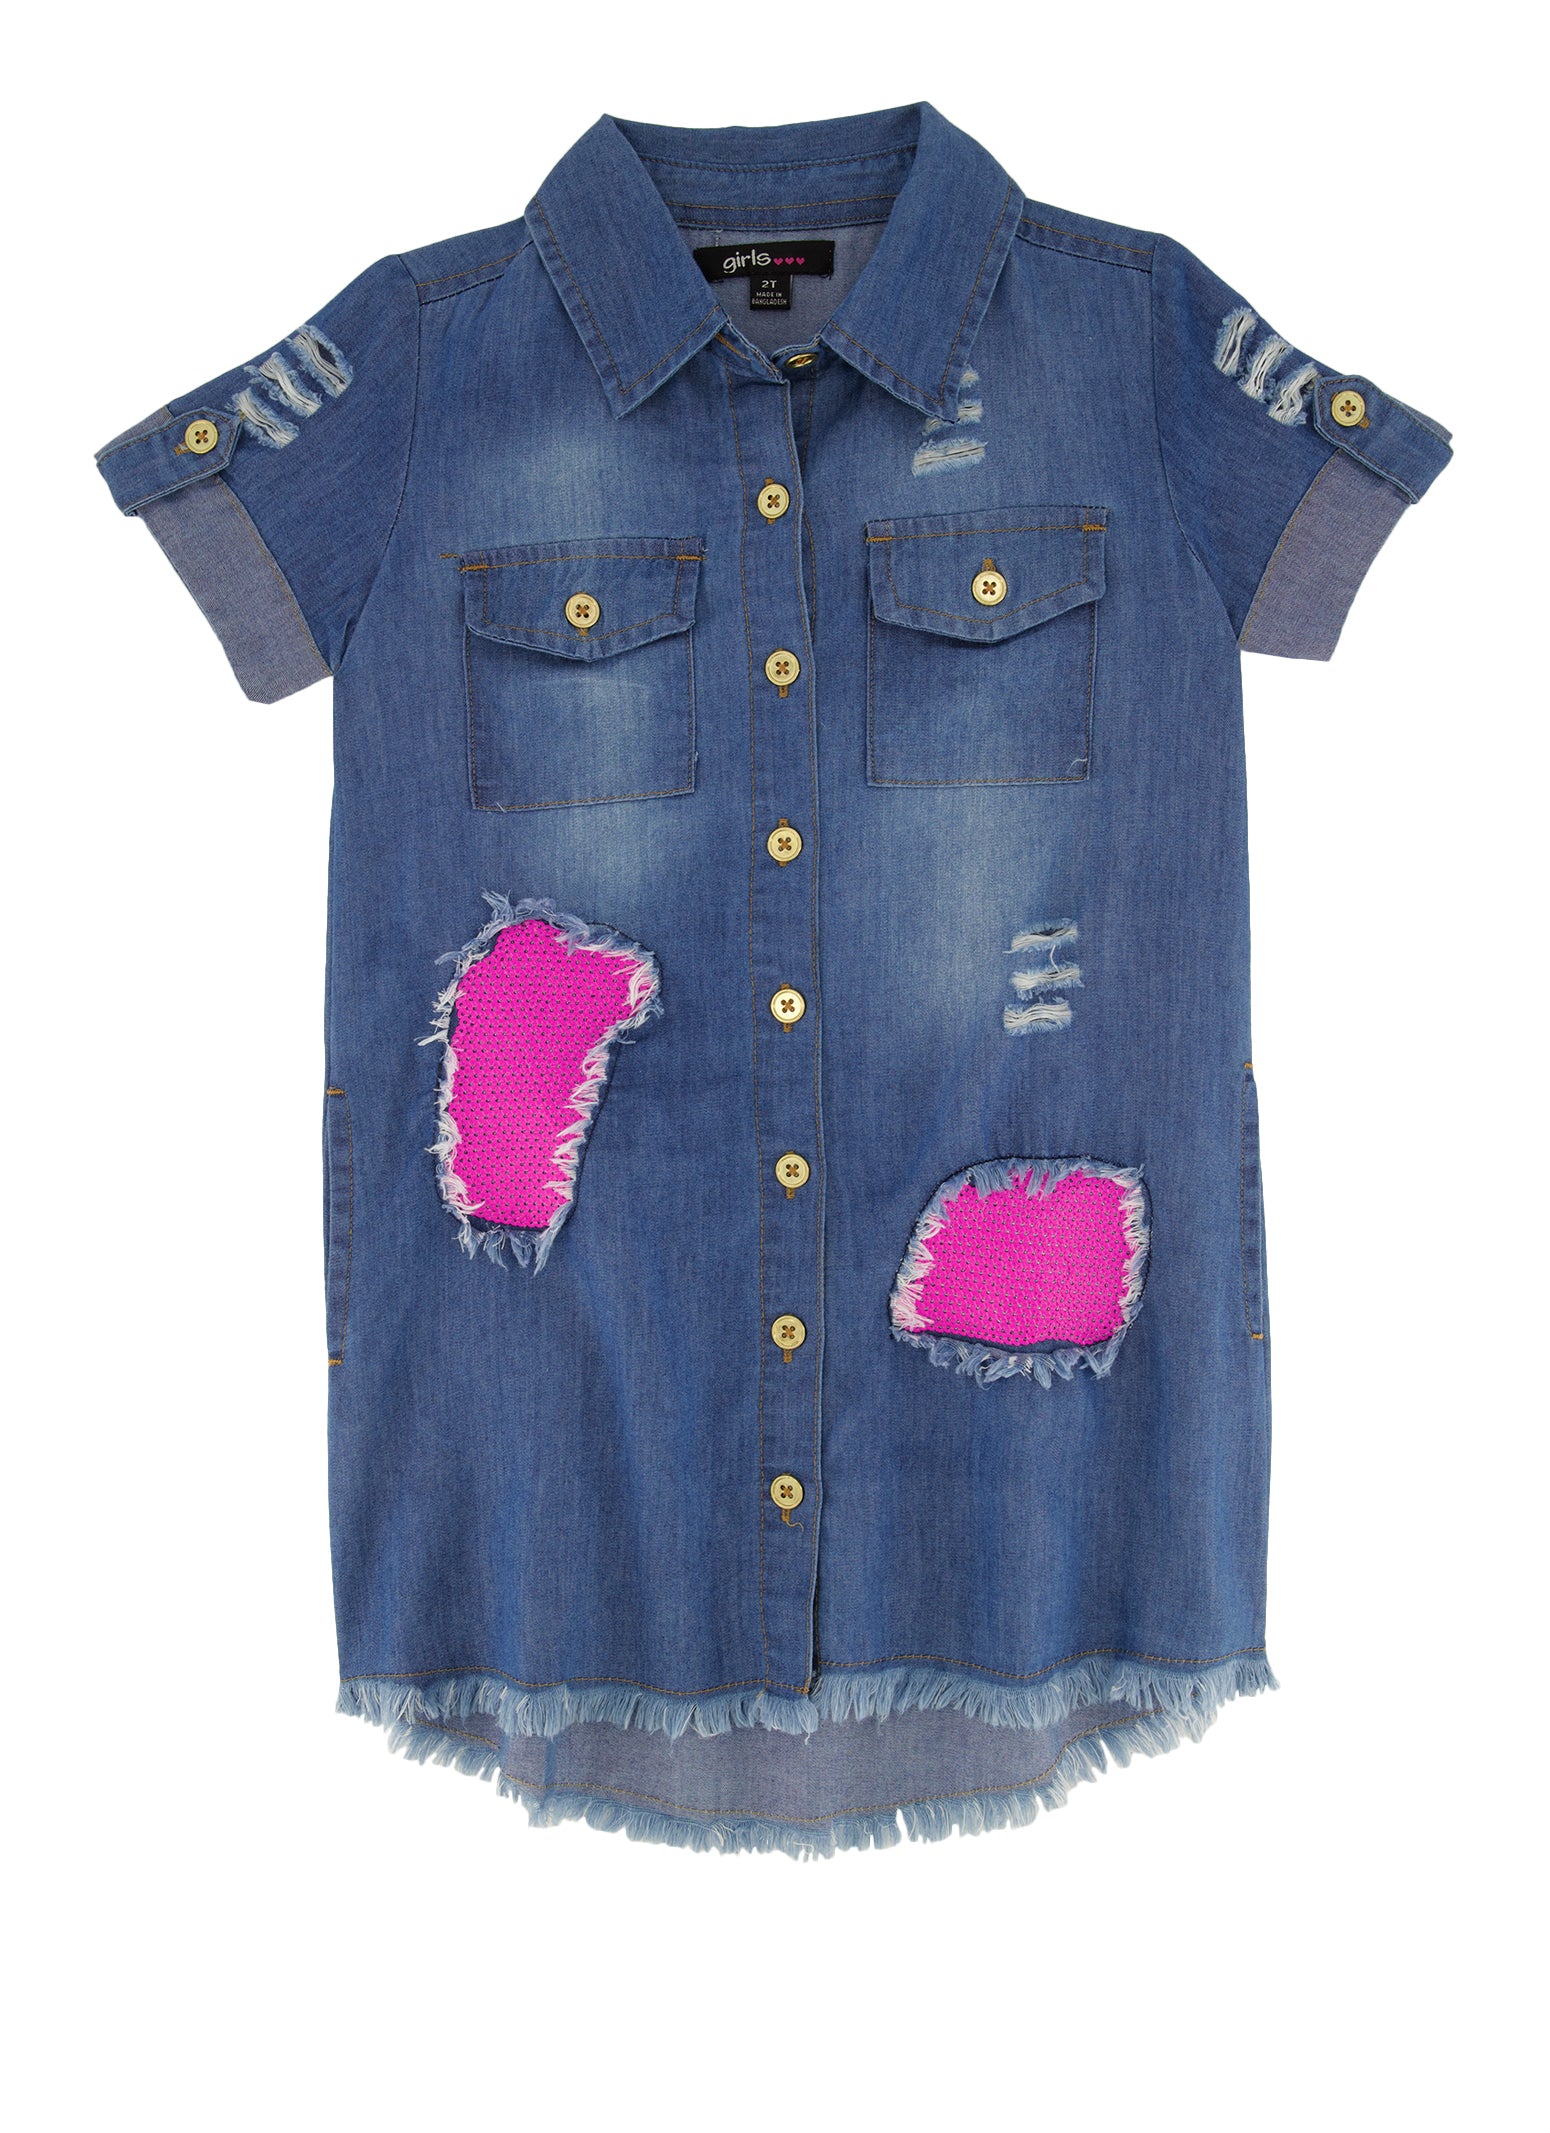 Children's Clothing Girls | Spring Clothes Kids Girls | Toddler Girls Denim  Shirt - Blouses & Shirts - Aliexpress